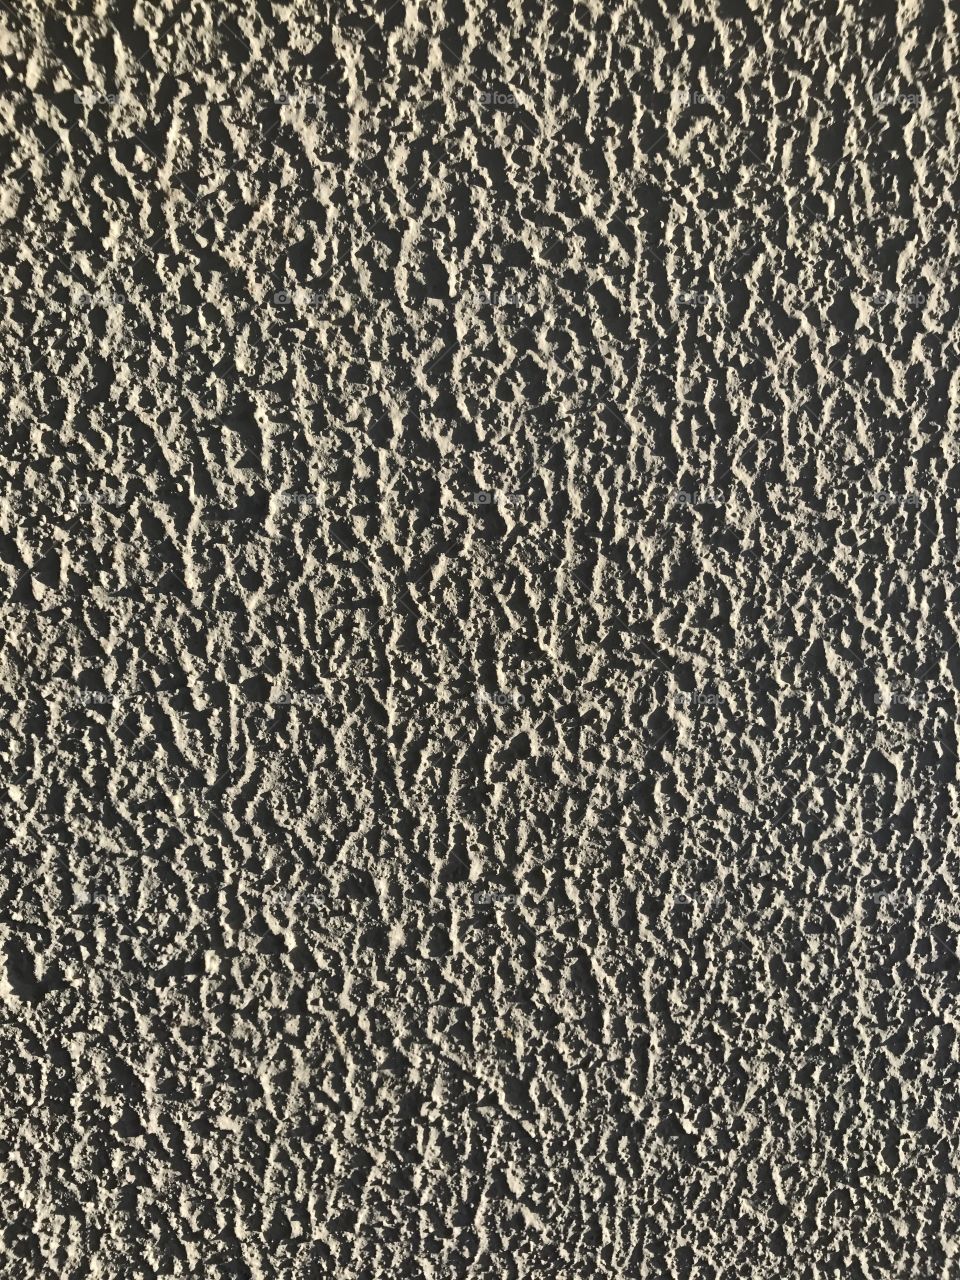 Texture wall